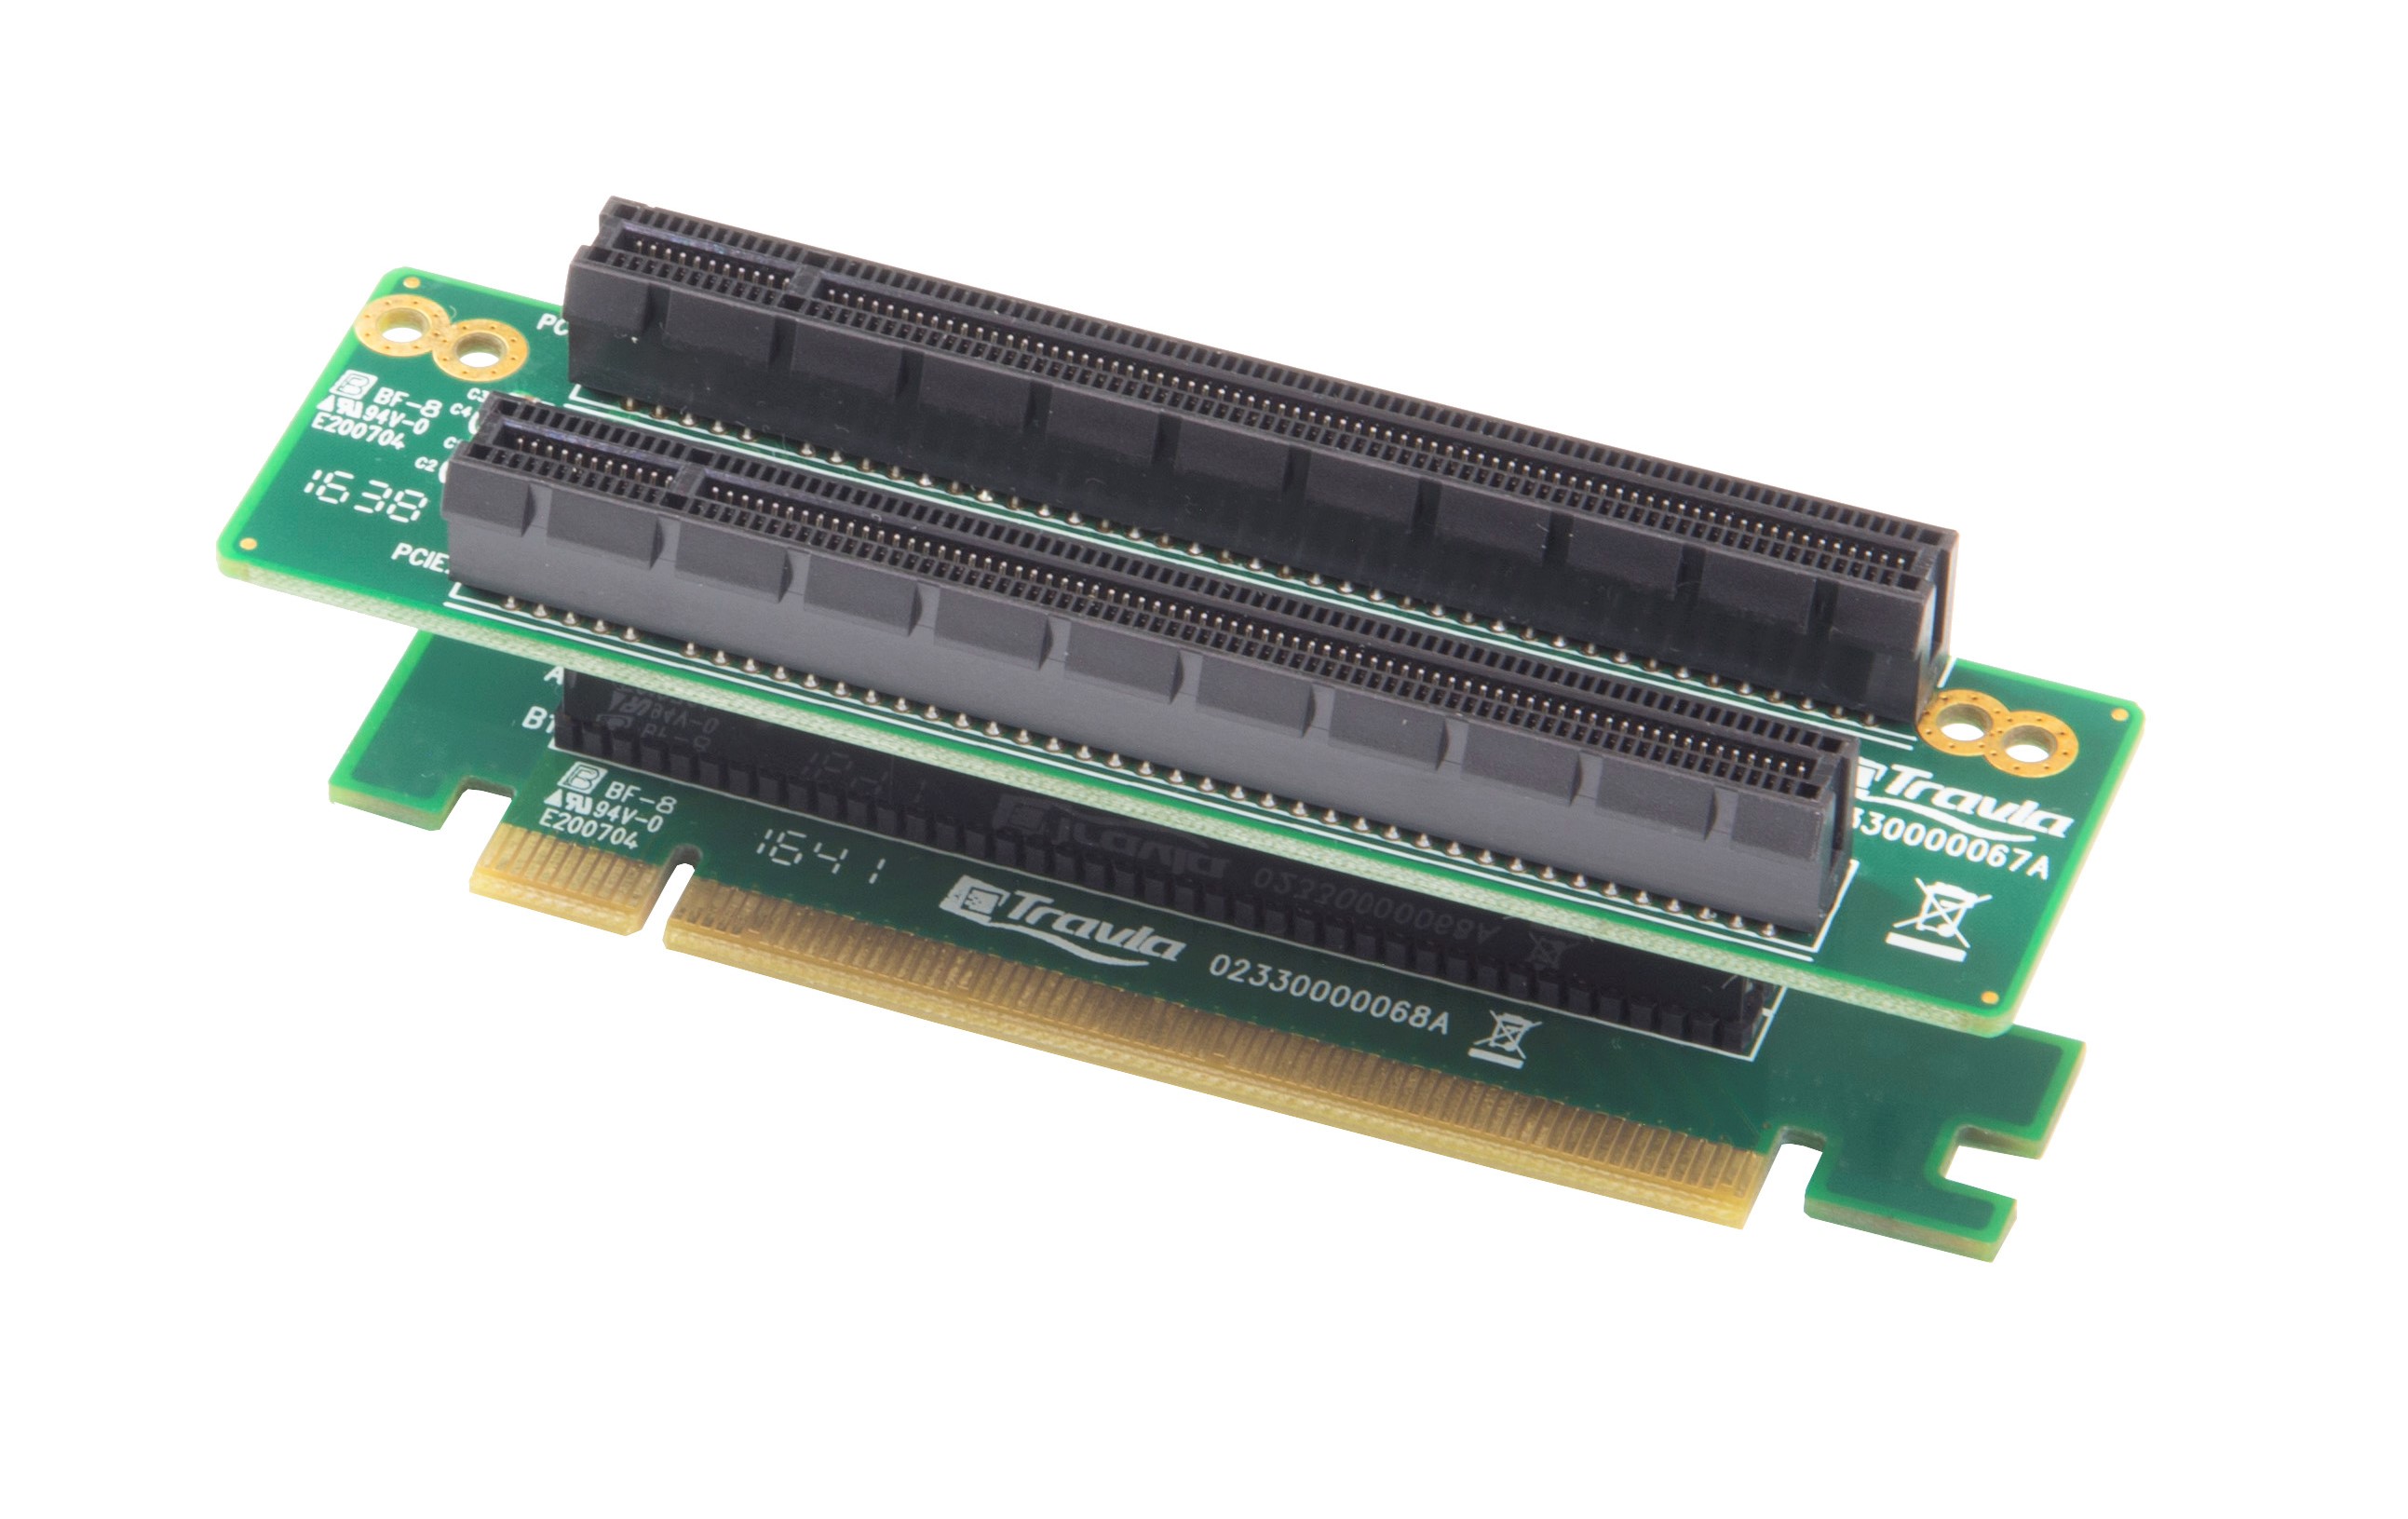 PCIe X16 to Dual X8 Riser Card  |Products|Accessories|PCI-Express Riser Card